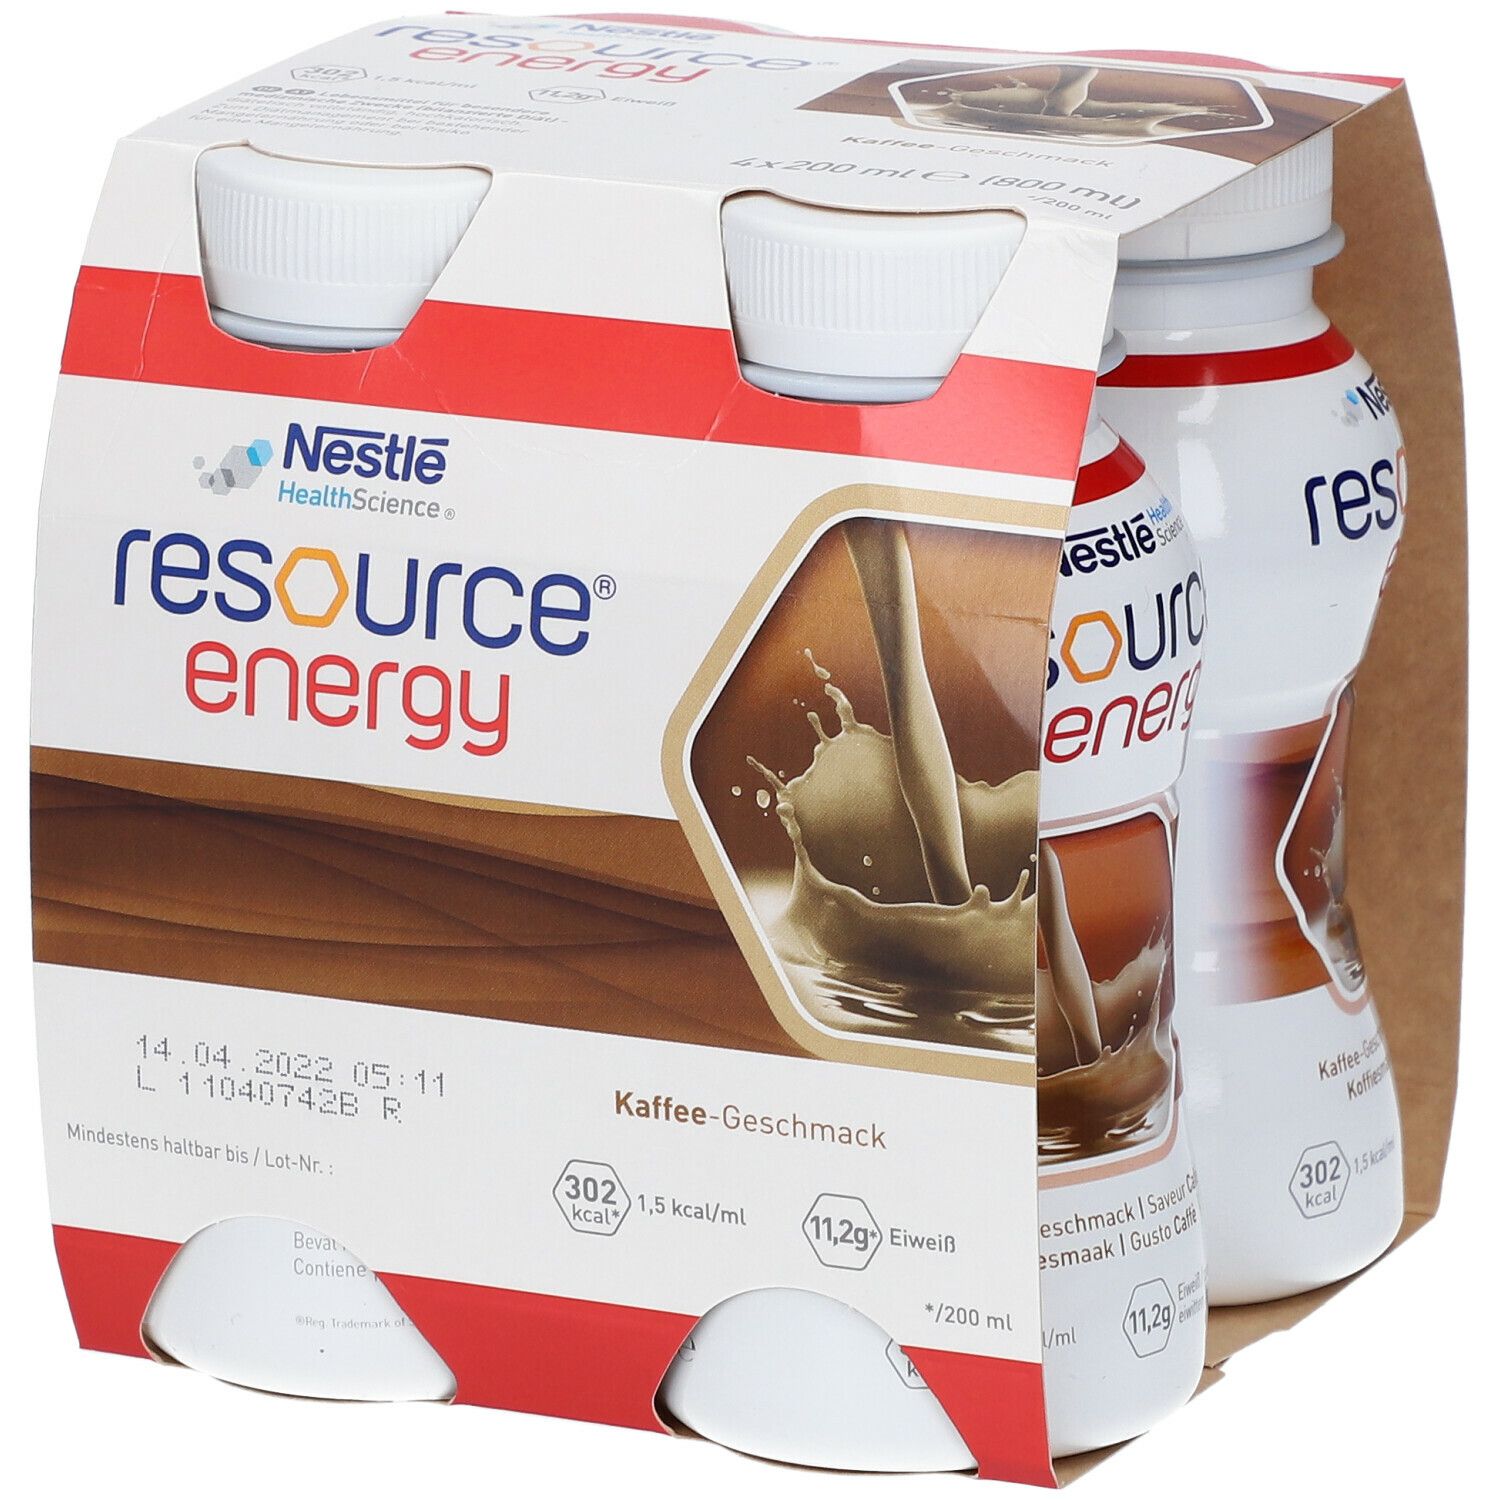 RESOURCE® Energy Kaffee